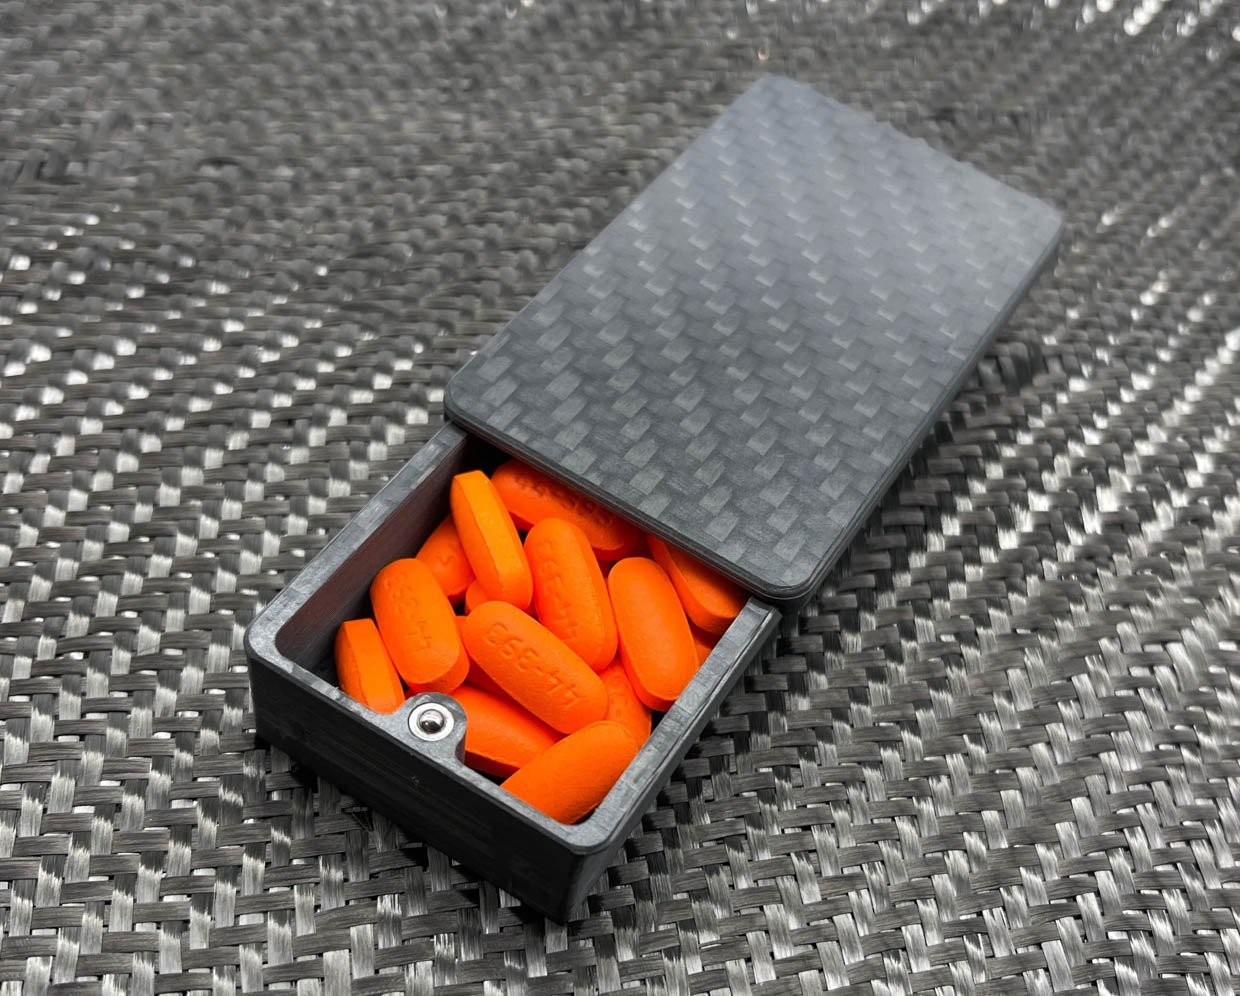 Carbon Fiber Pocket Stash Box